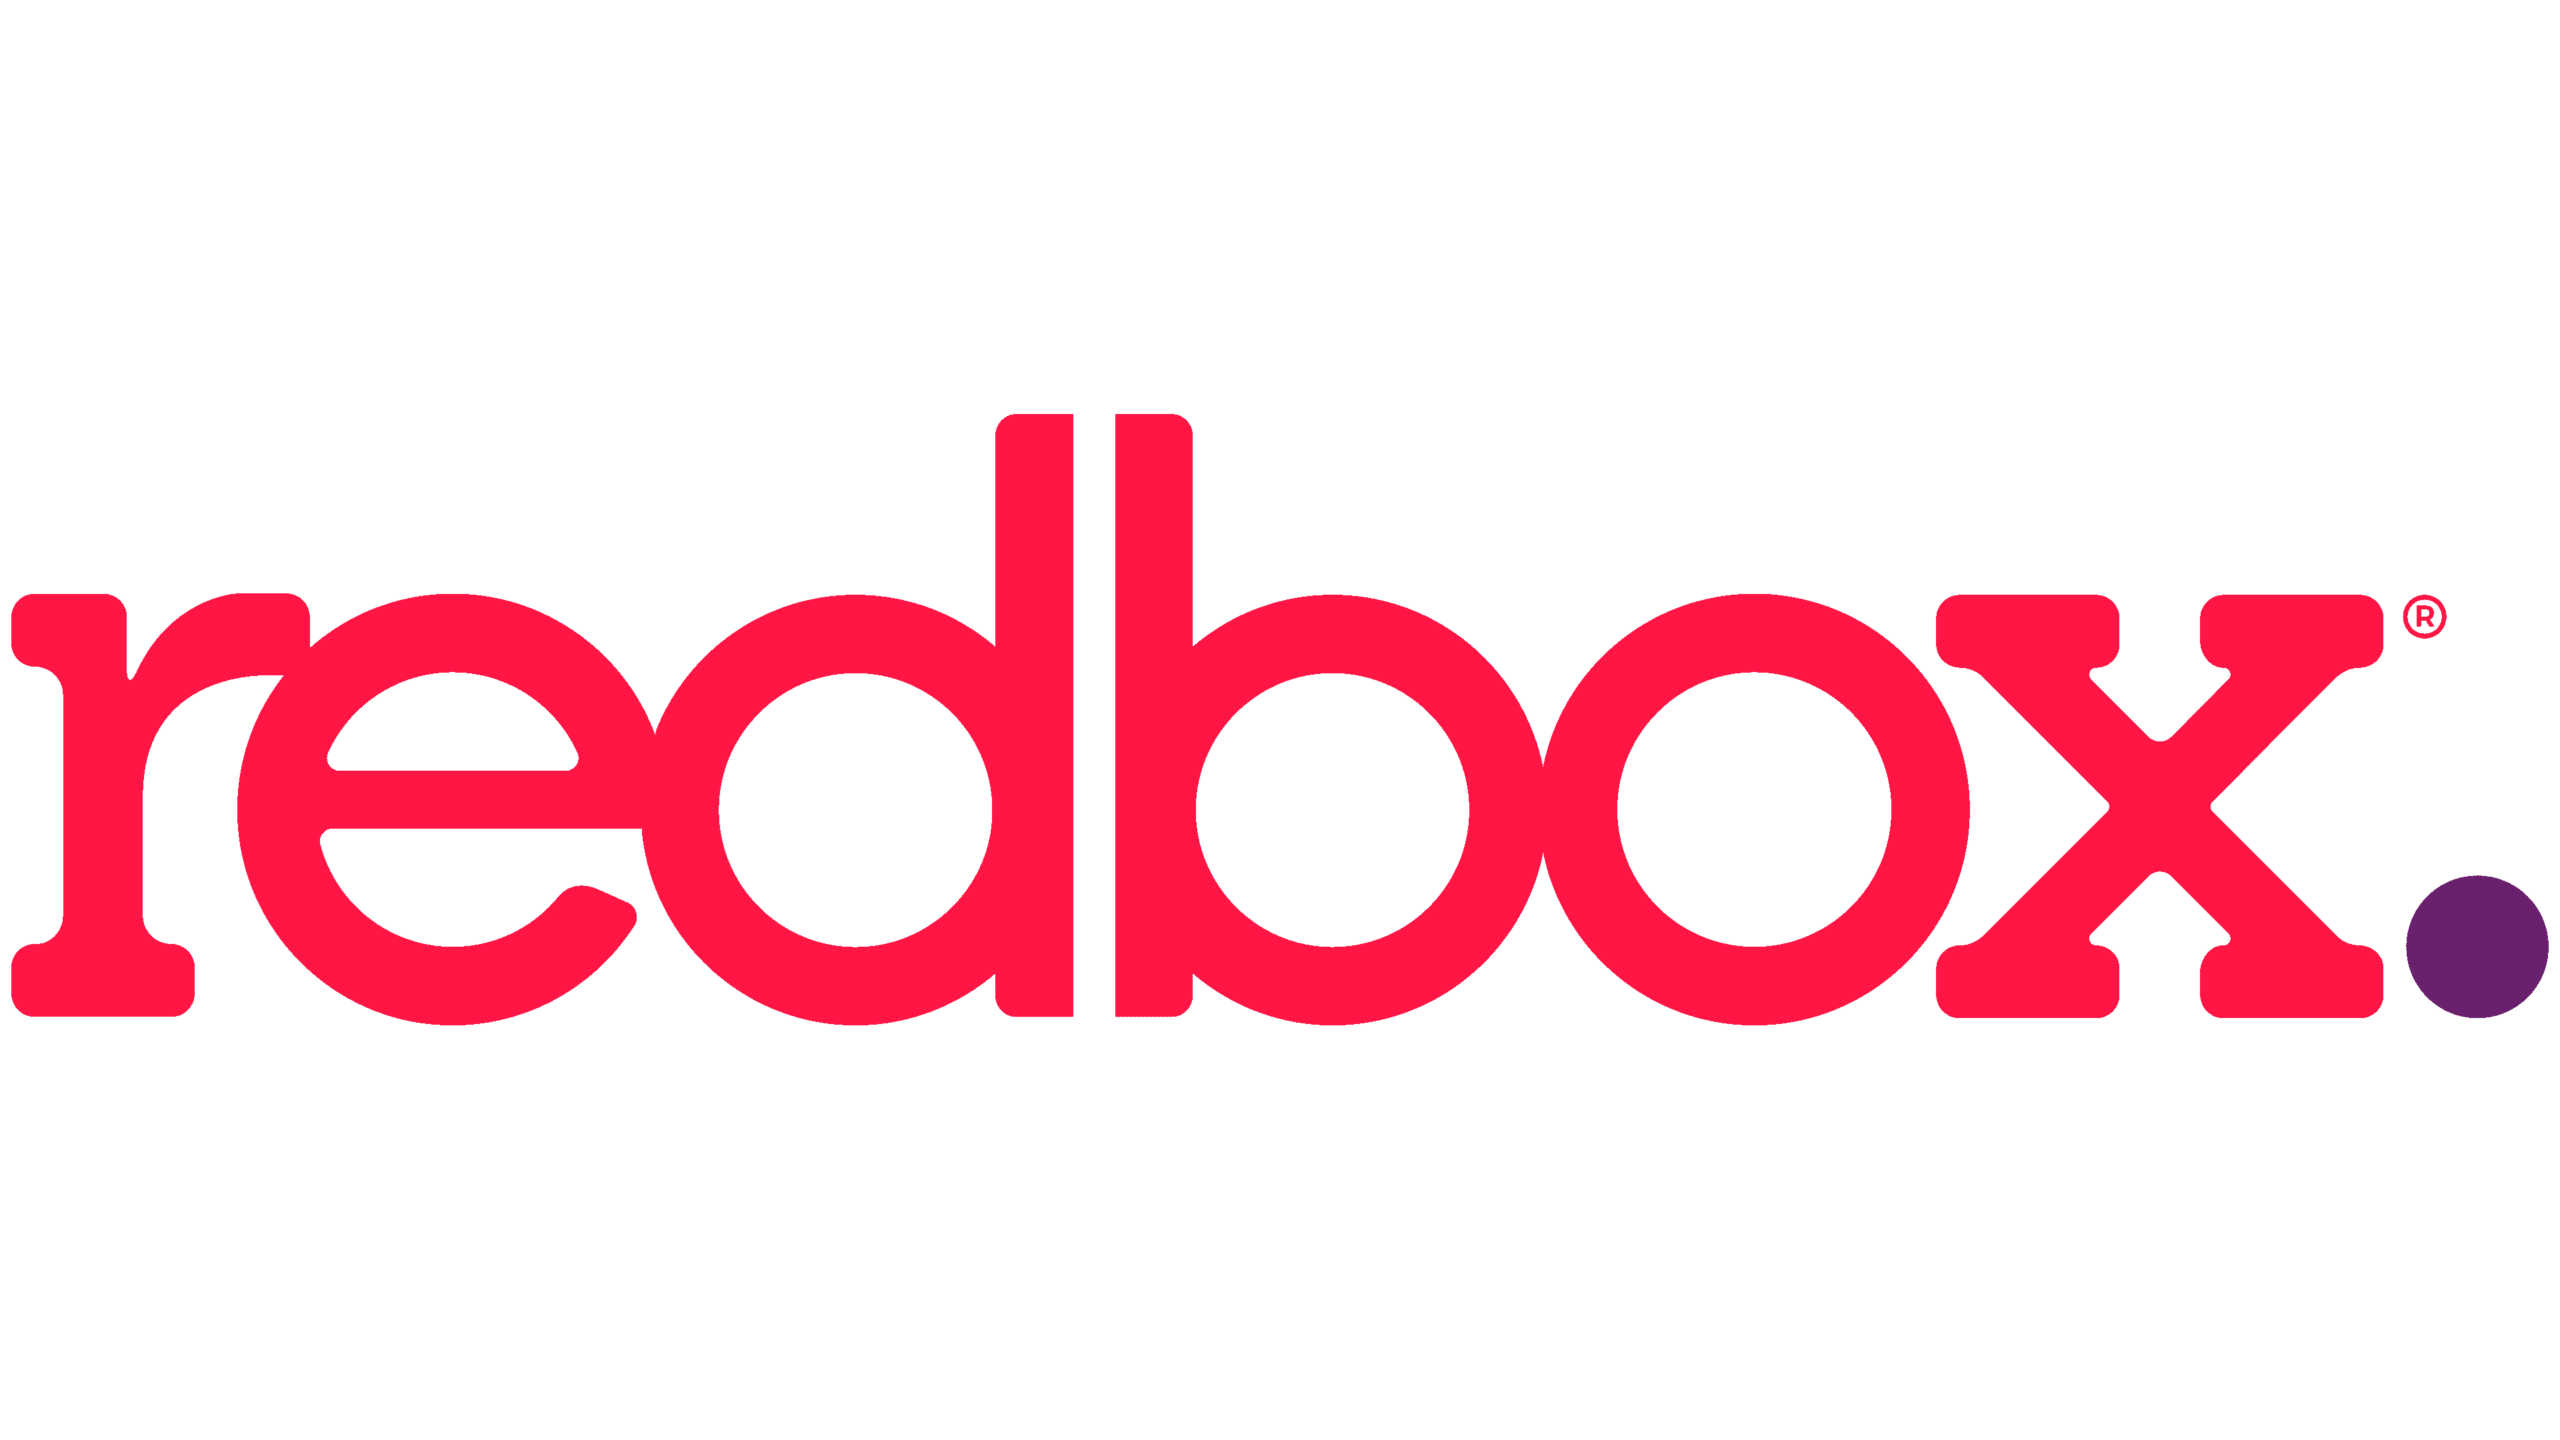 Redbox Logo